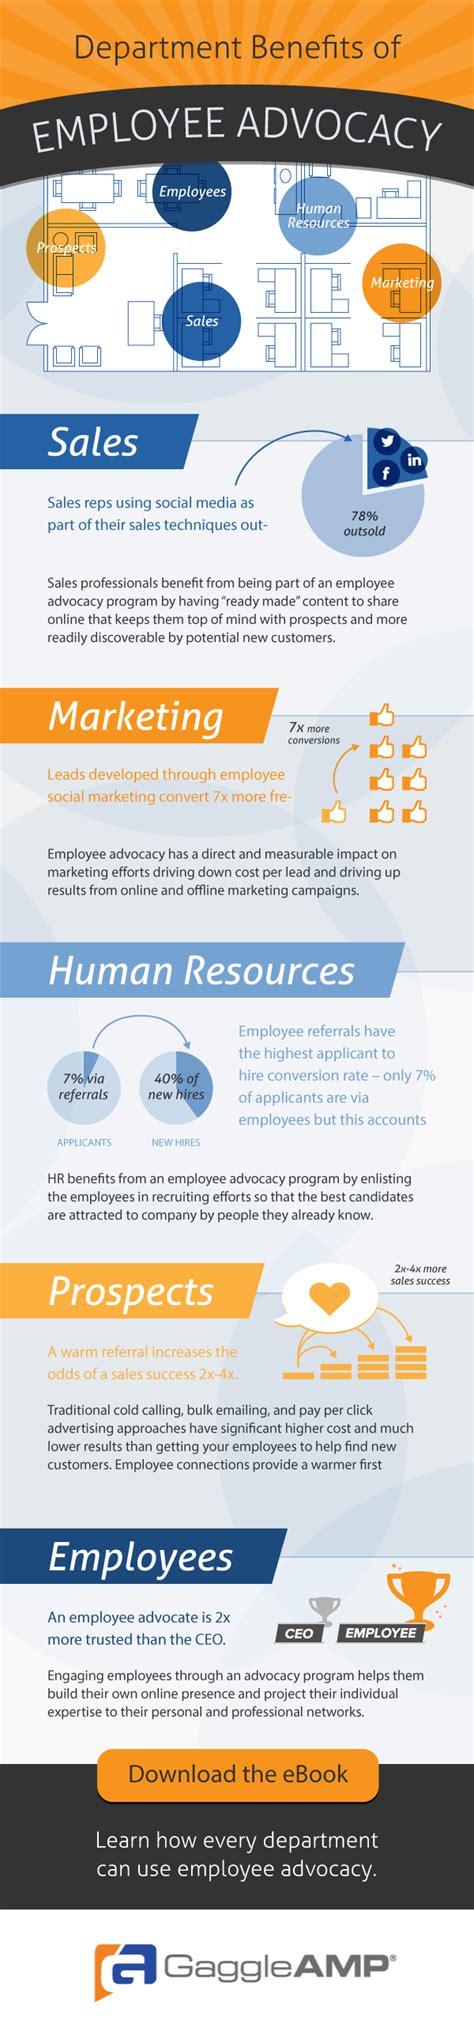 Department Benefits of Employee Advocacy [Infographic] | Advocacy, Infographic, Growth marketing